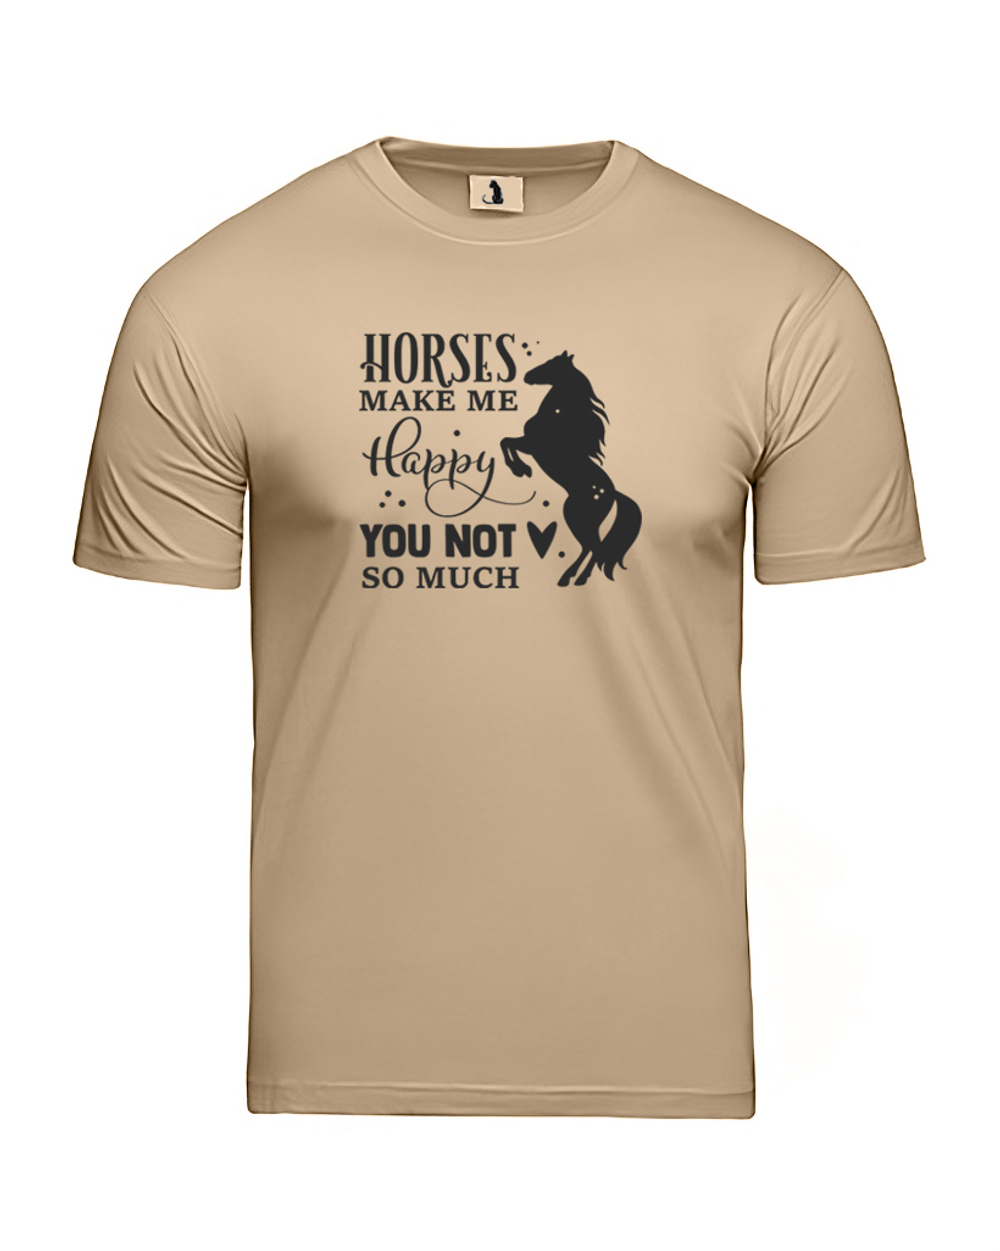 Футболка Horses make me happy unisex бежевая с черным рисунком